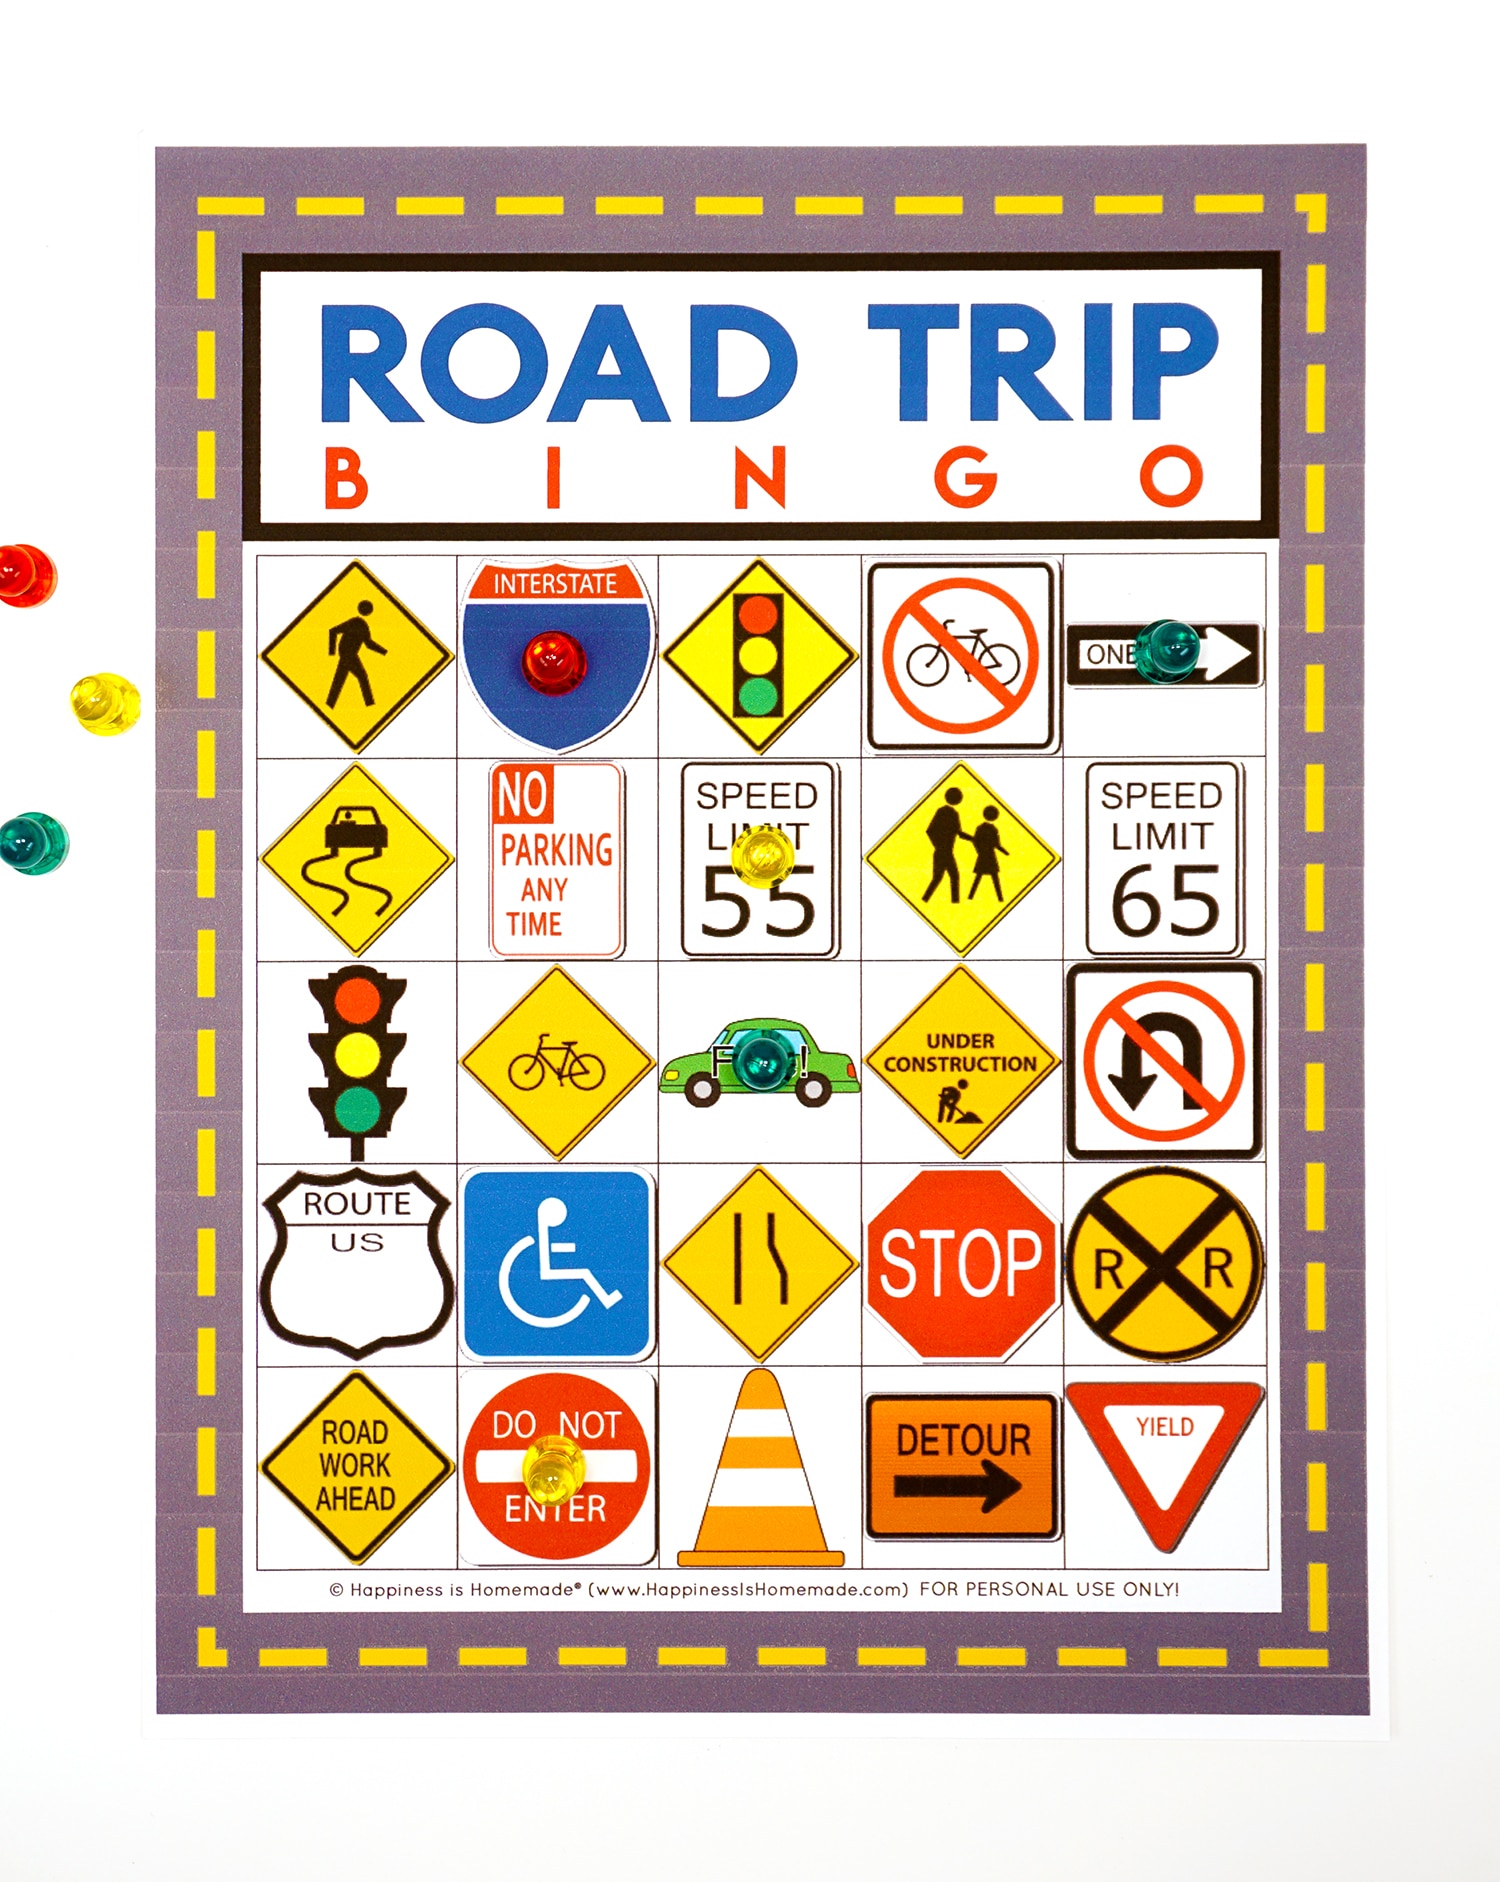 License Plate Bingo Cards